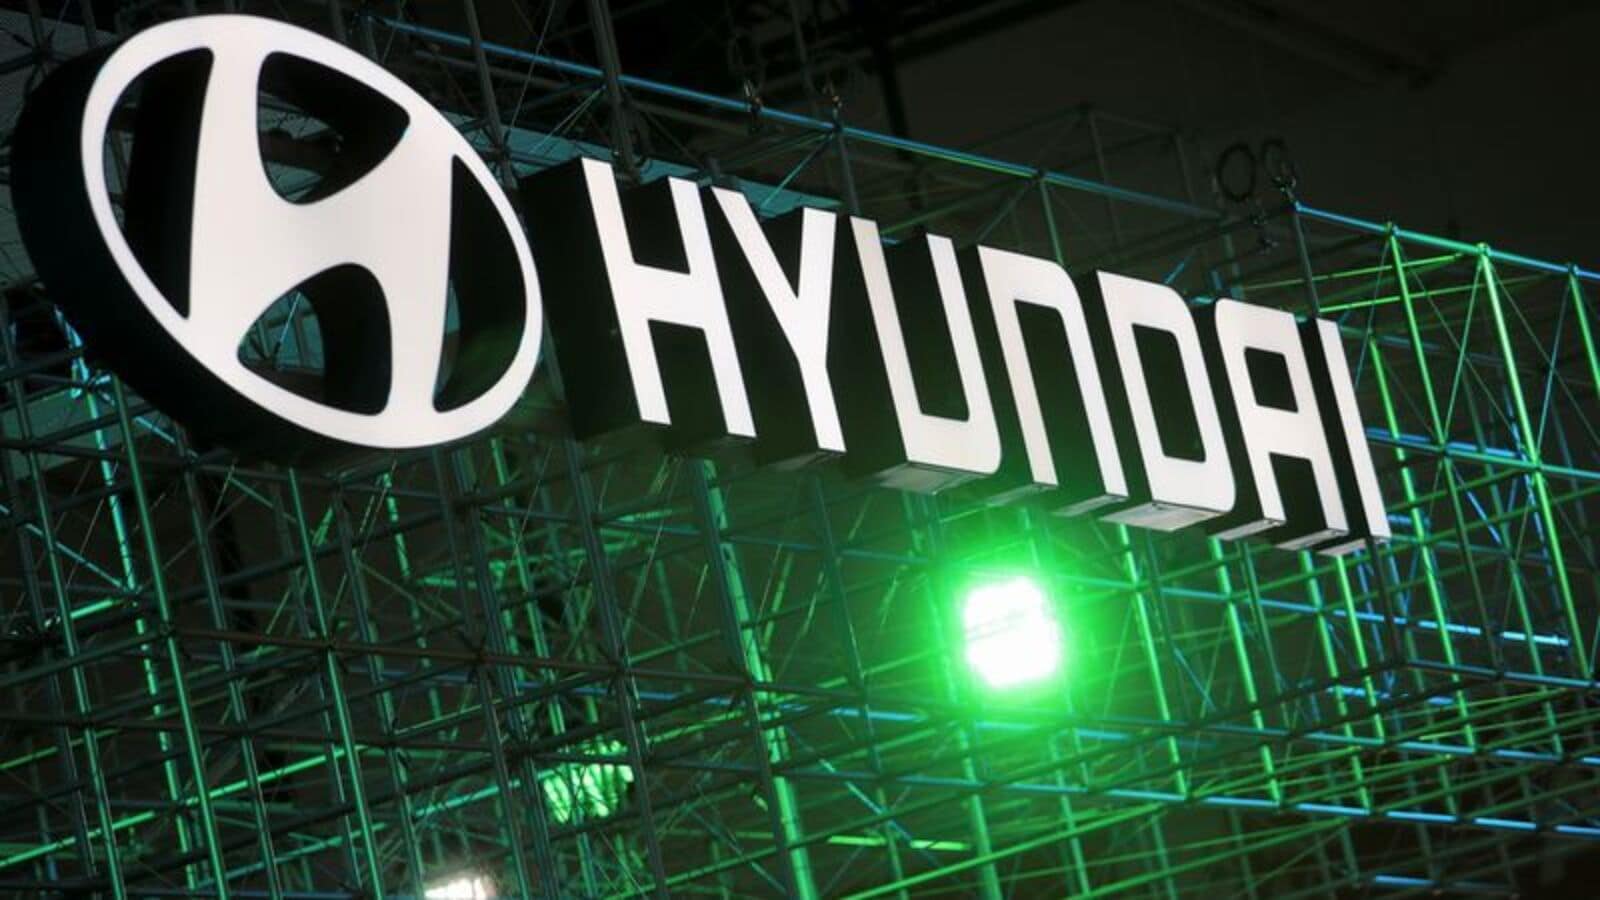 https://nftgames.net/wp-content/uploads/2022/07/Hyundai.jpg